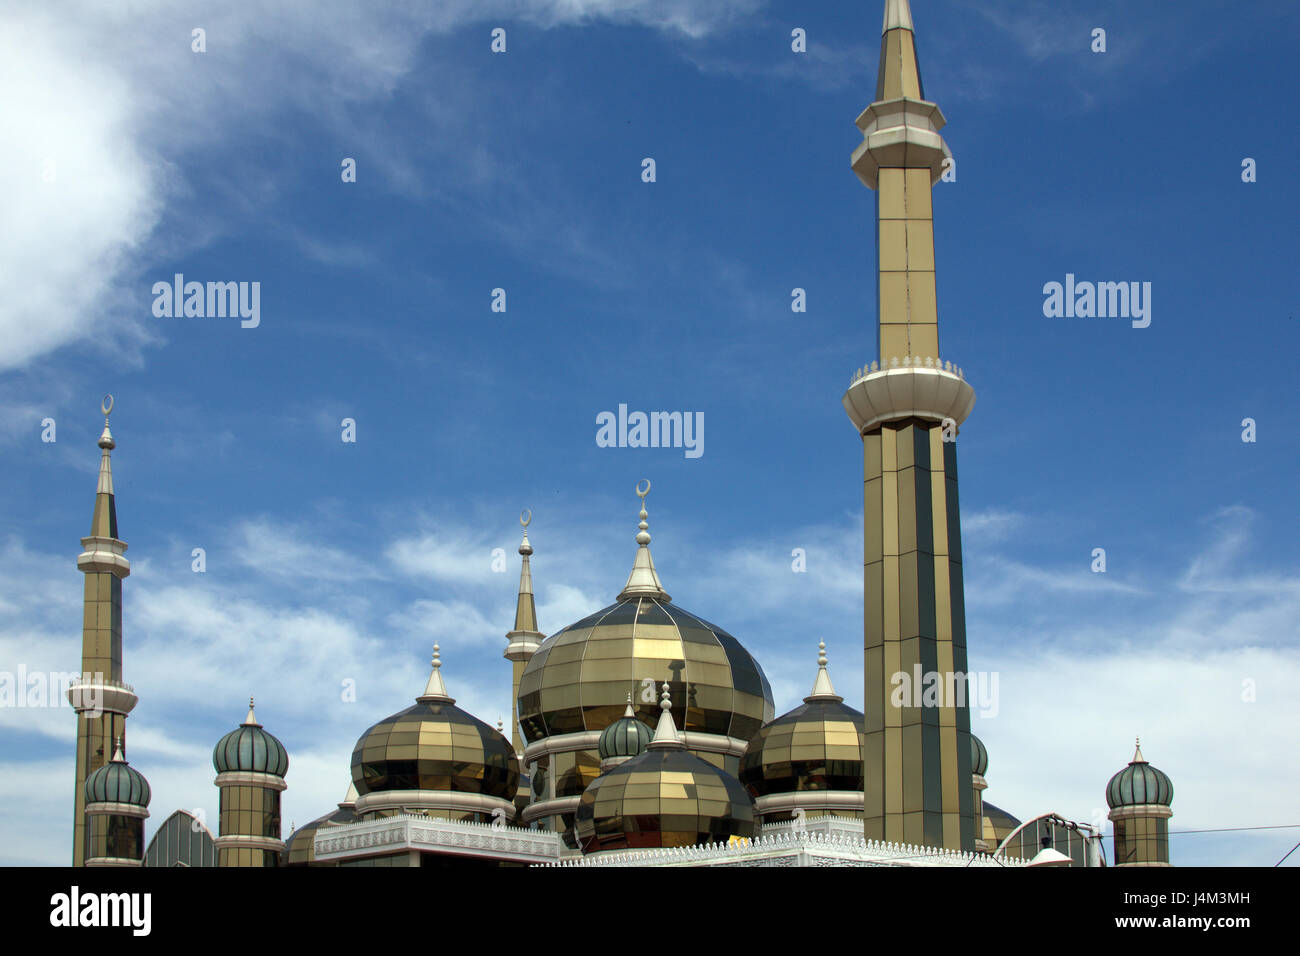 Multiple glass-walled domes and minarets of the Crystal Mosque at Kuala Terengganu, Terengganu state, Malaysia. Stock Photo